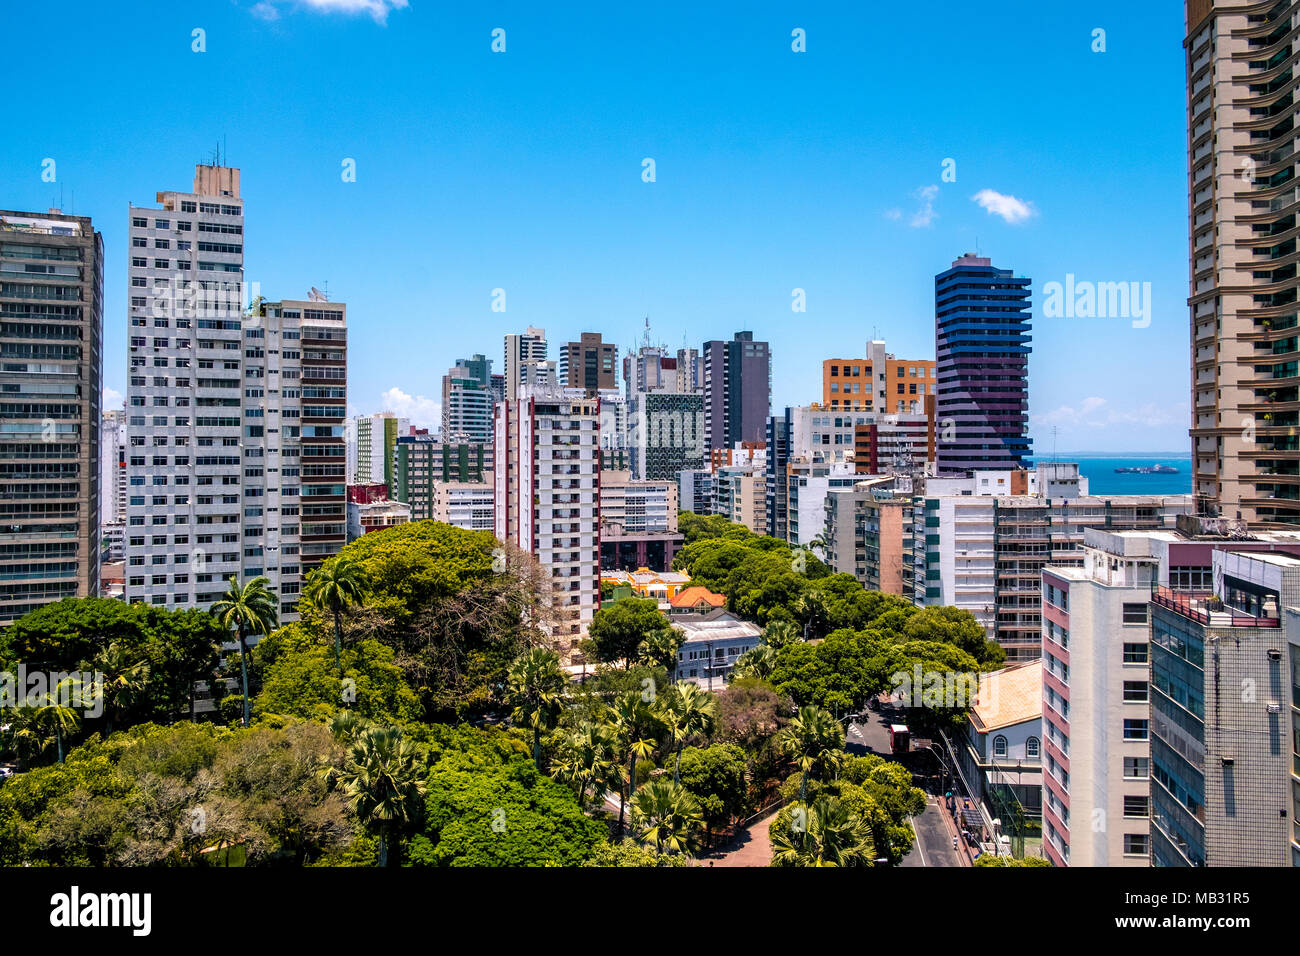 Skyscrapers in the city, Salvador de Bahia, Brazil Stock Photo